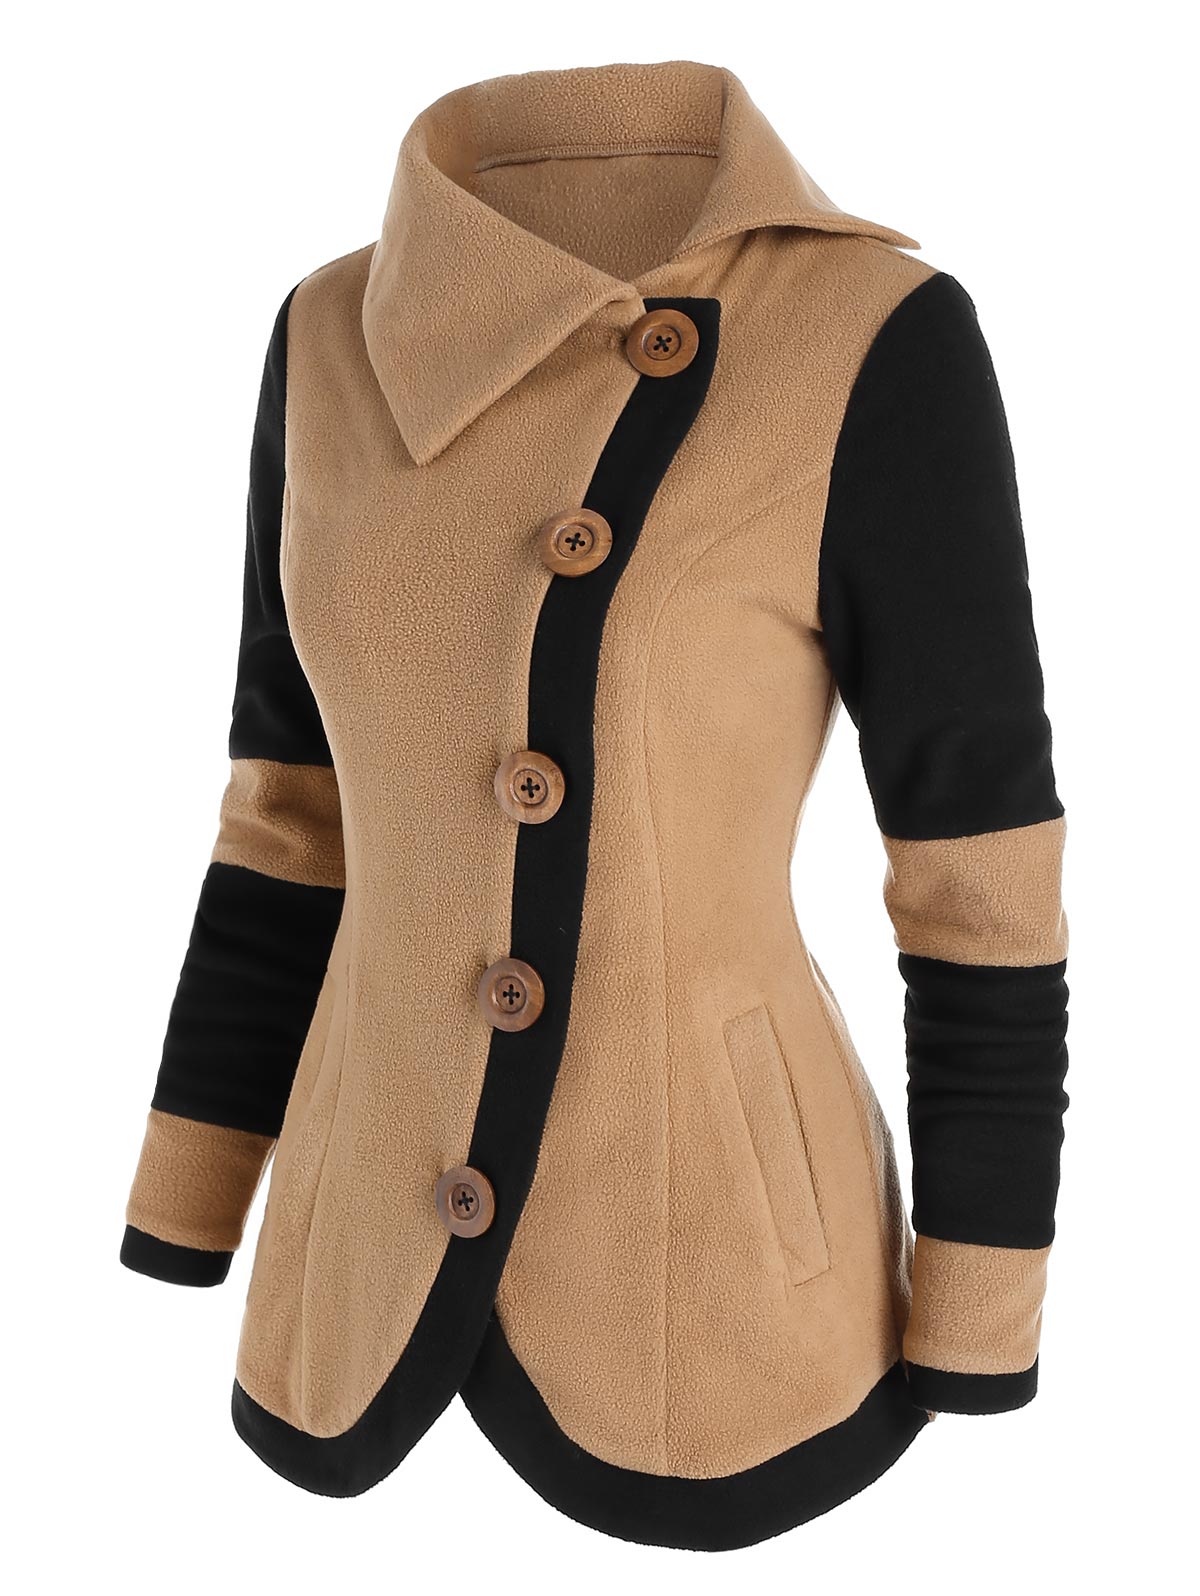 come4buy.com-Fleece Jacket Full Sleeve Warm Coat